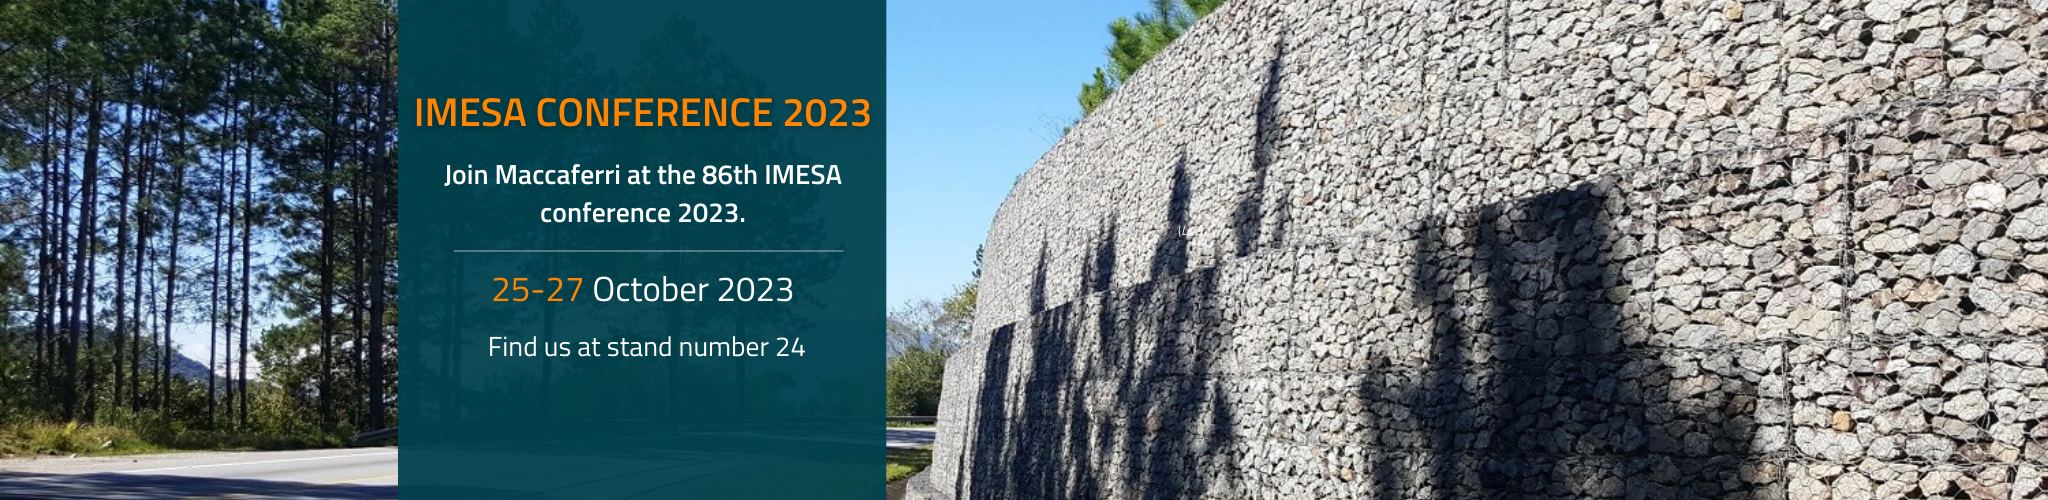 Join the Maccaferri SA team at the 86th IMESA conference 2023